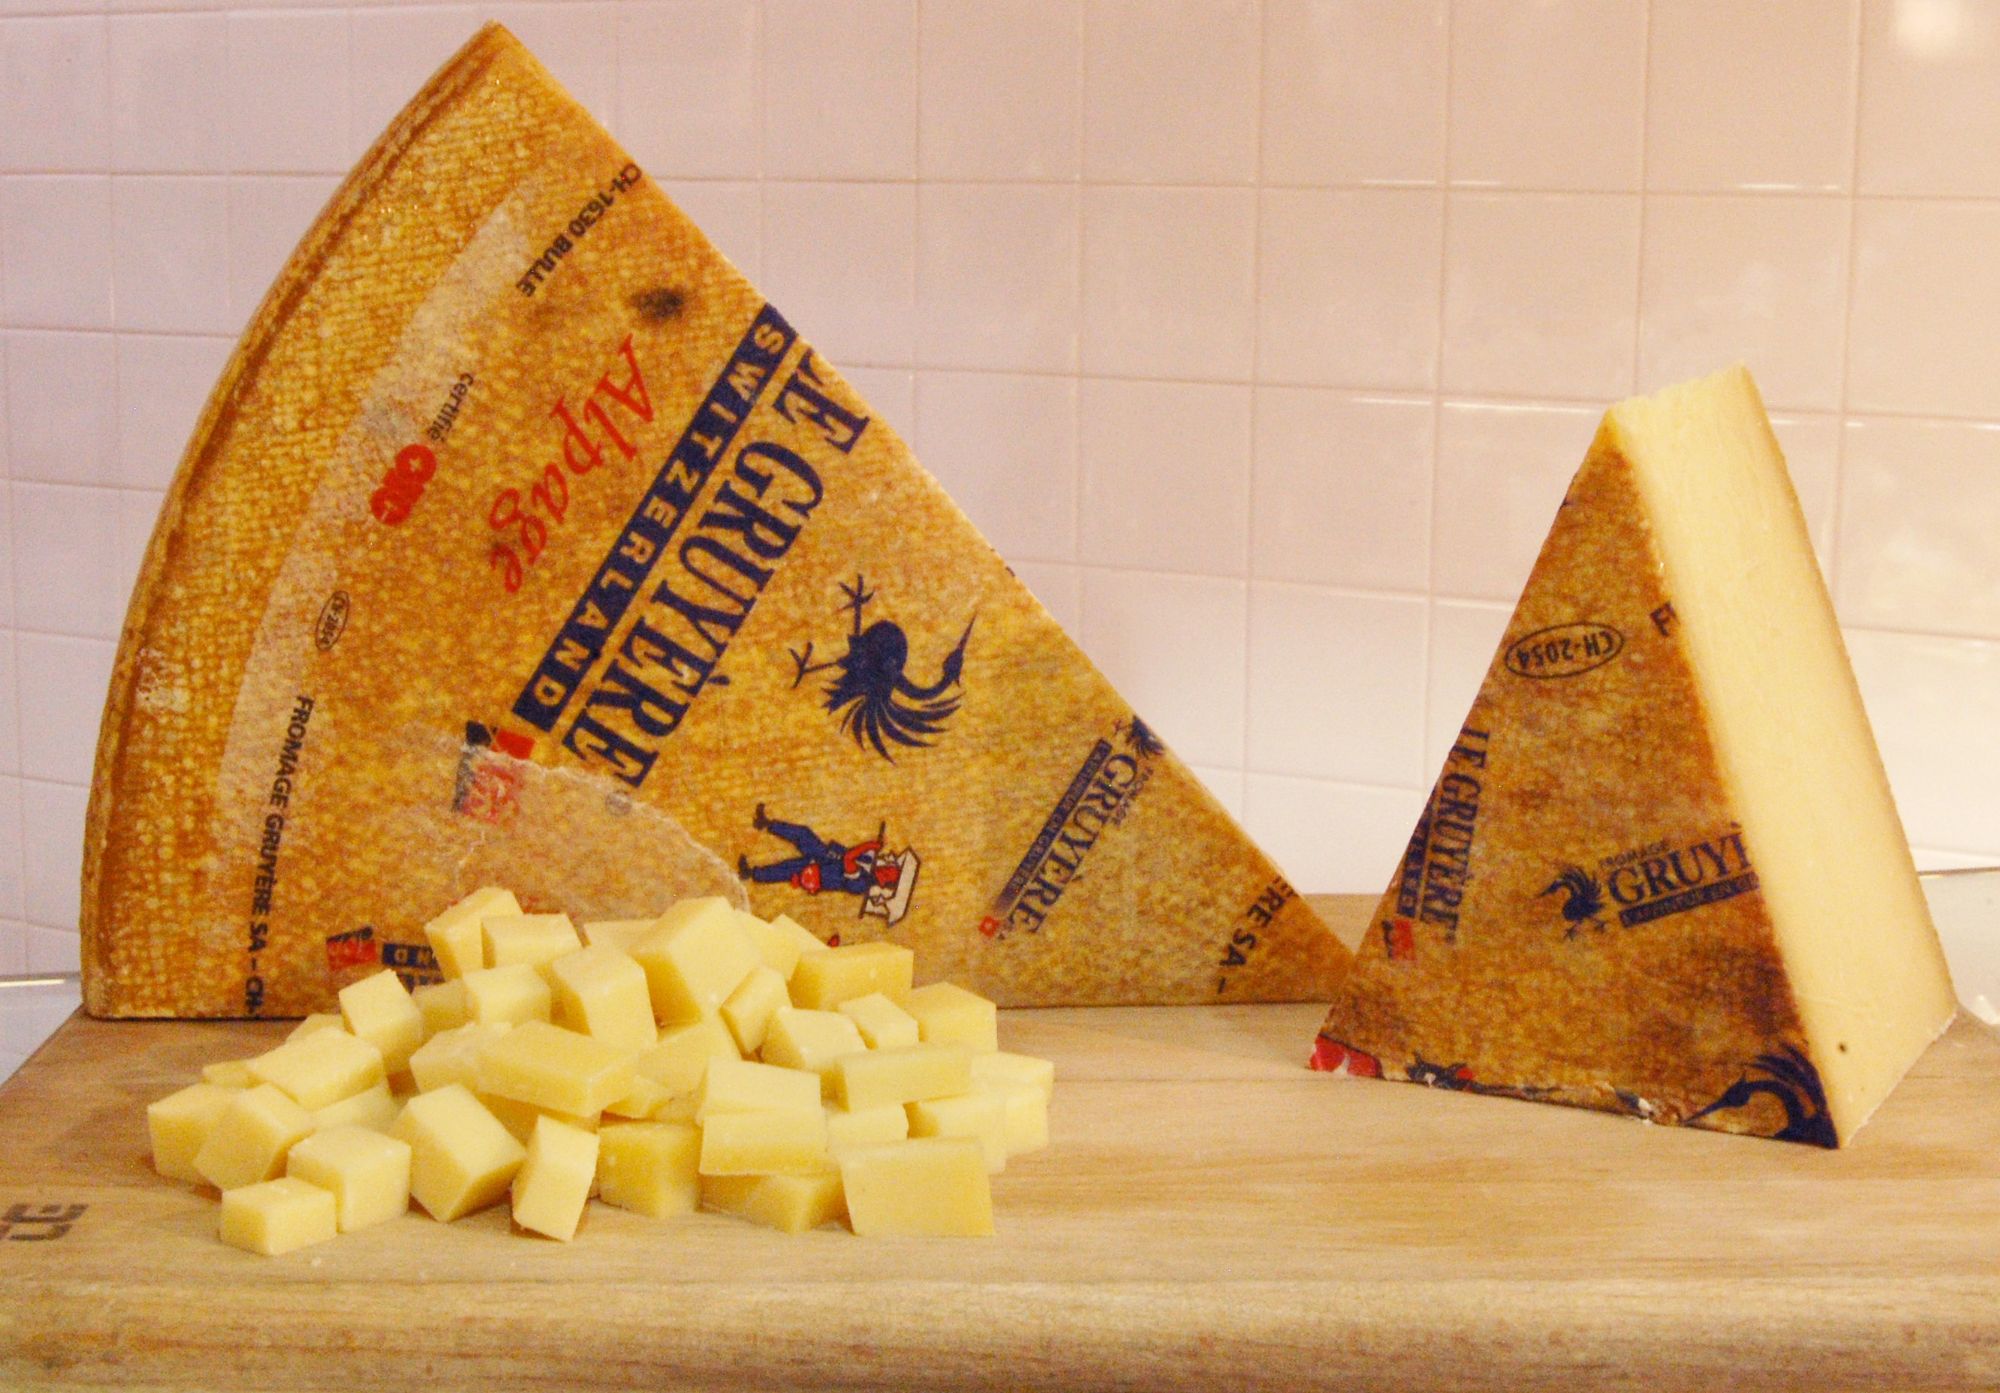 Le Gruyere Alpage AOP cheese house of bruar delicatessen counter